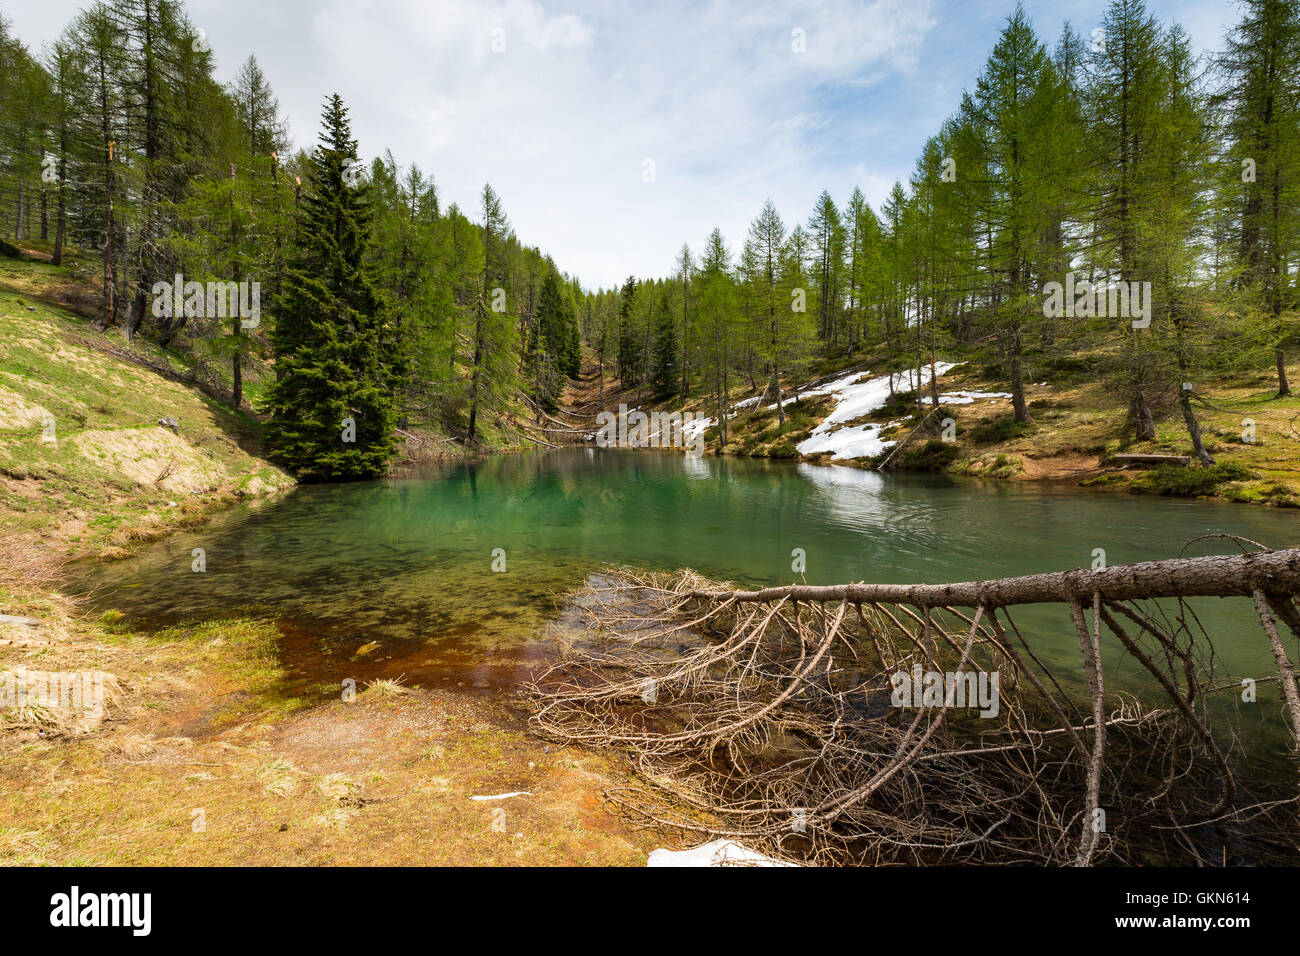 Lago delle Prese. Prese lake. The Lagorai mountain group. Trentino. Valsugana. Italian Alps. Europe. Stock Photo